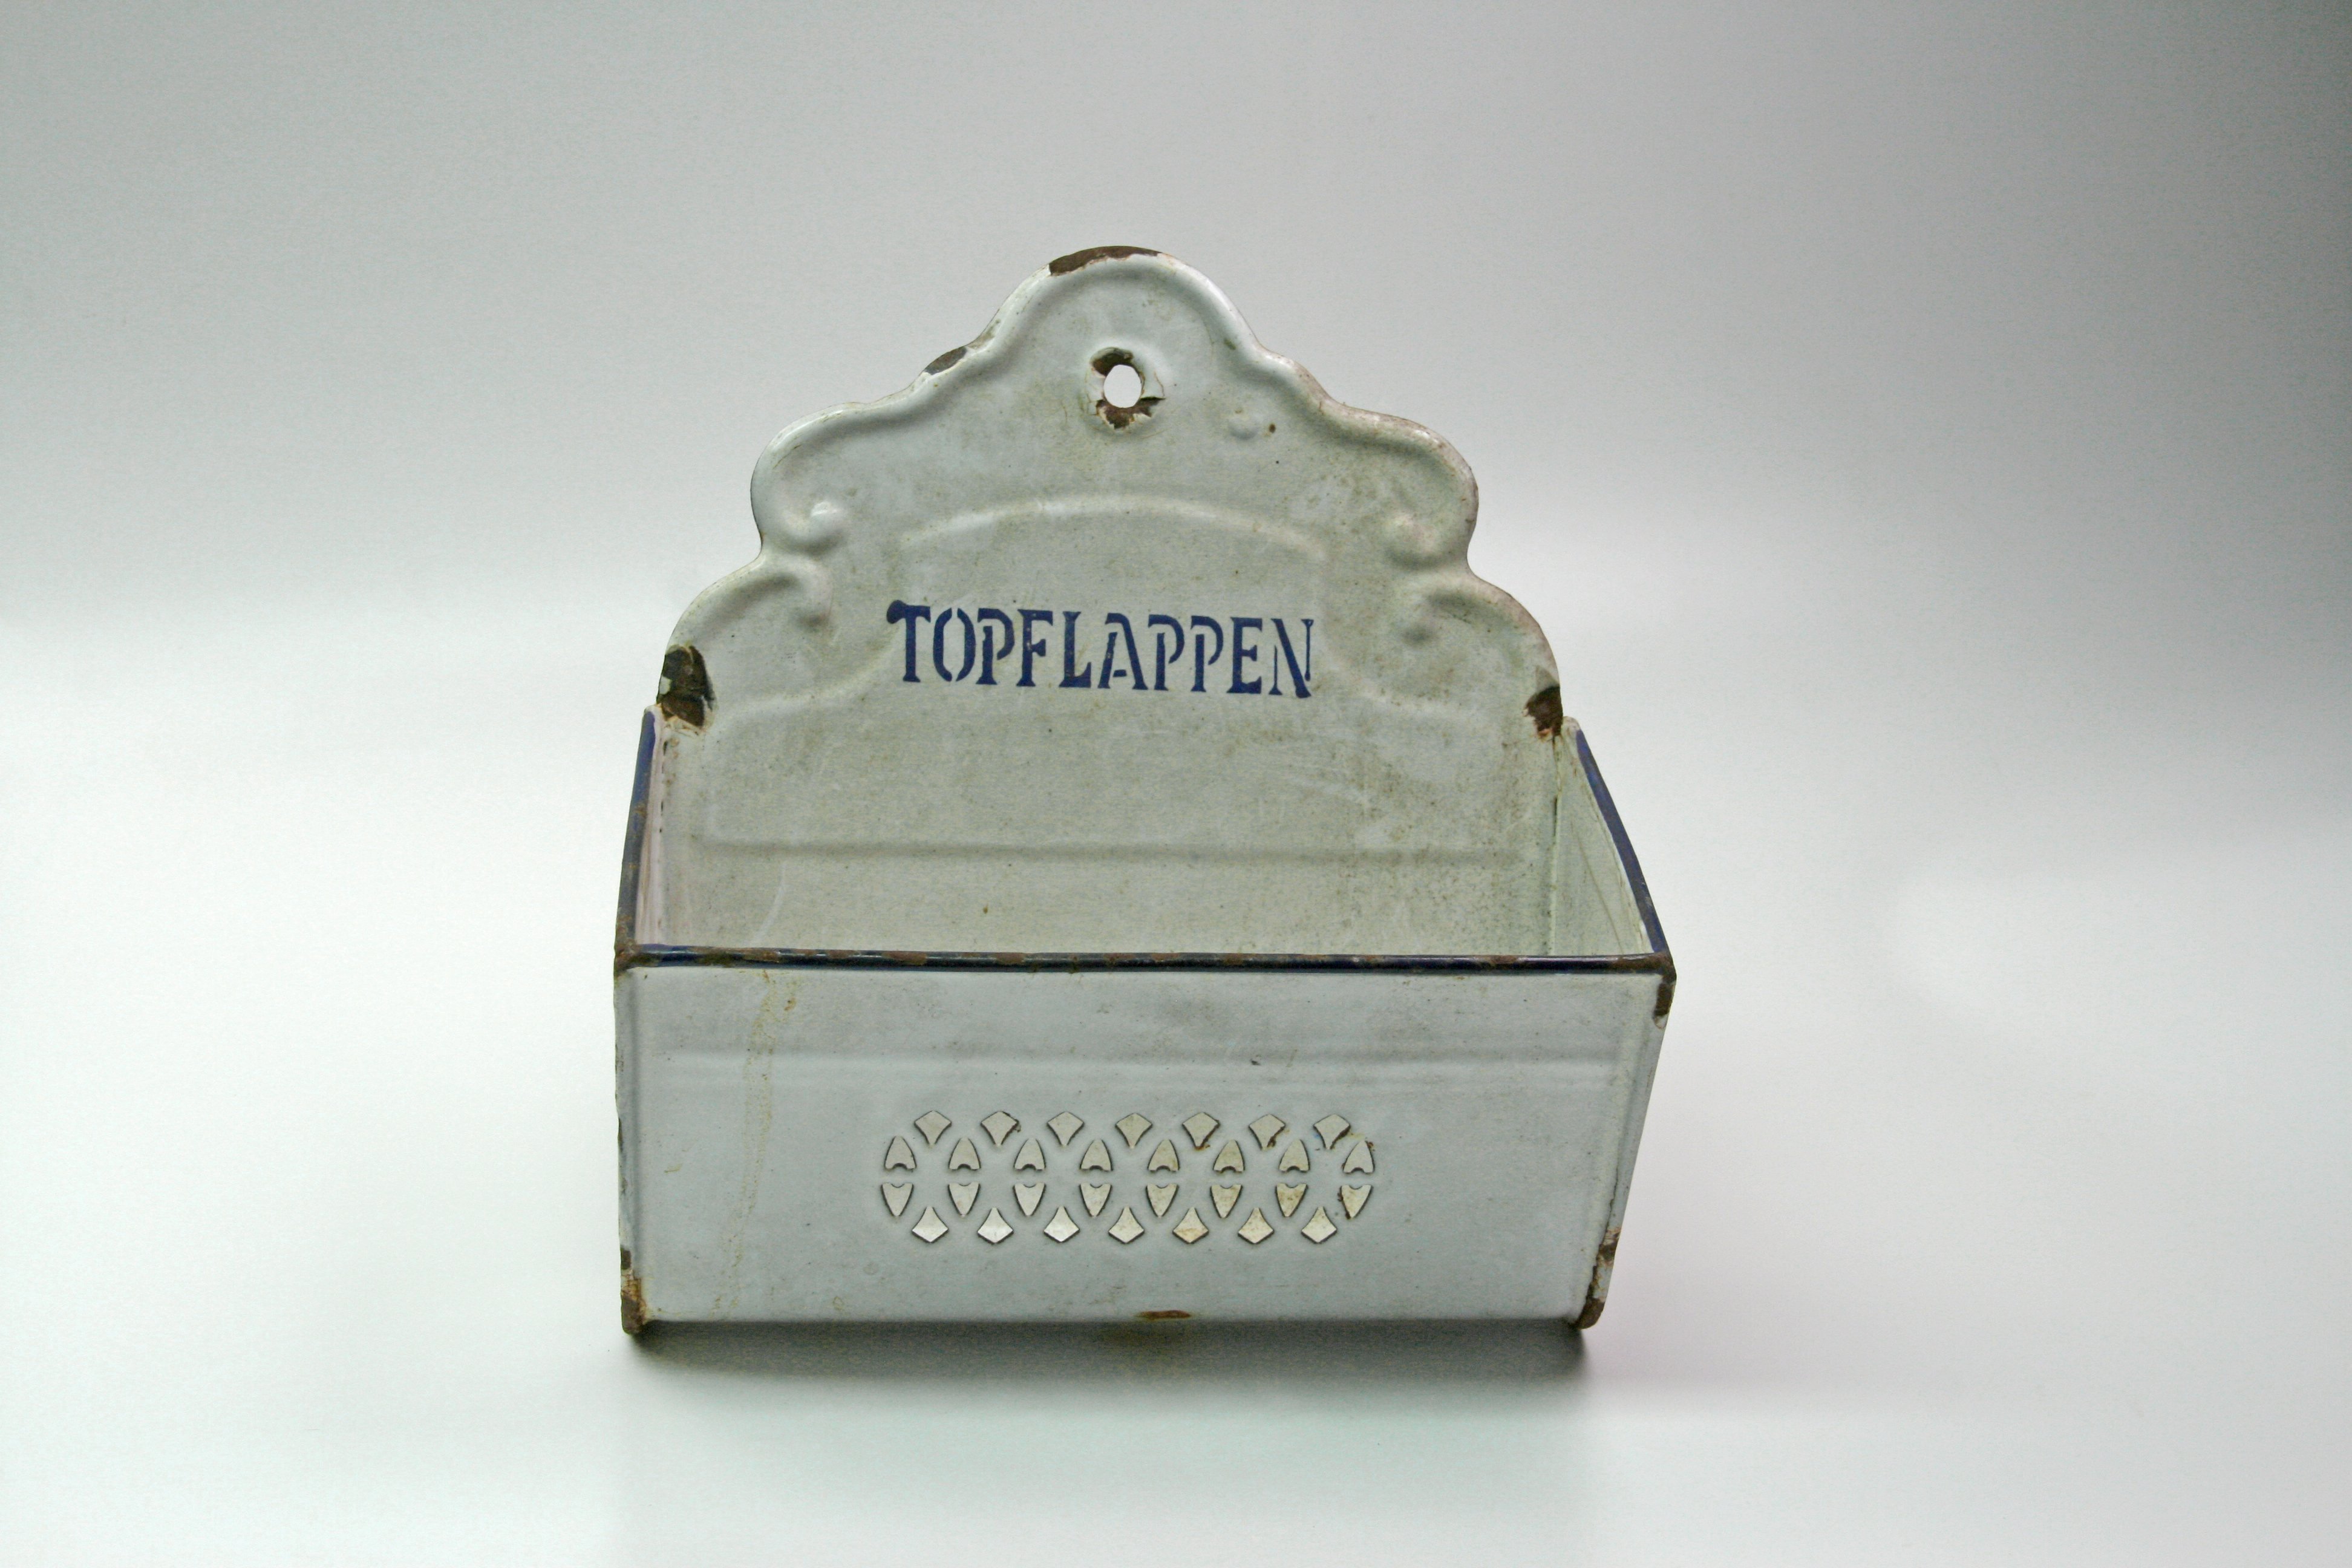 Topflappenbehälter, Emaille (Binnenschifffahrts-Museum Oderberg CC BY-NC-SA)